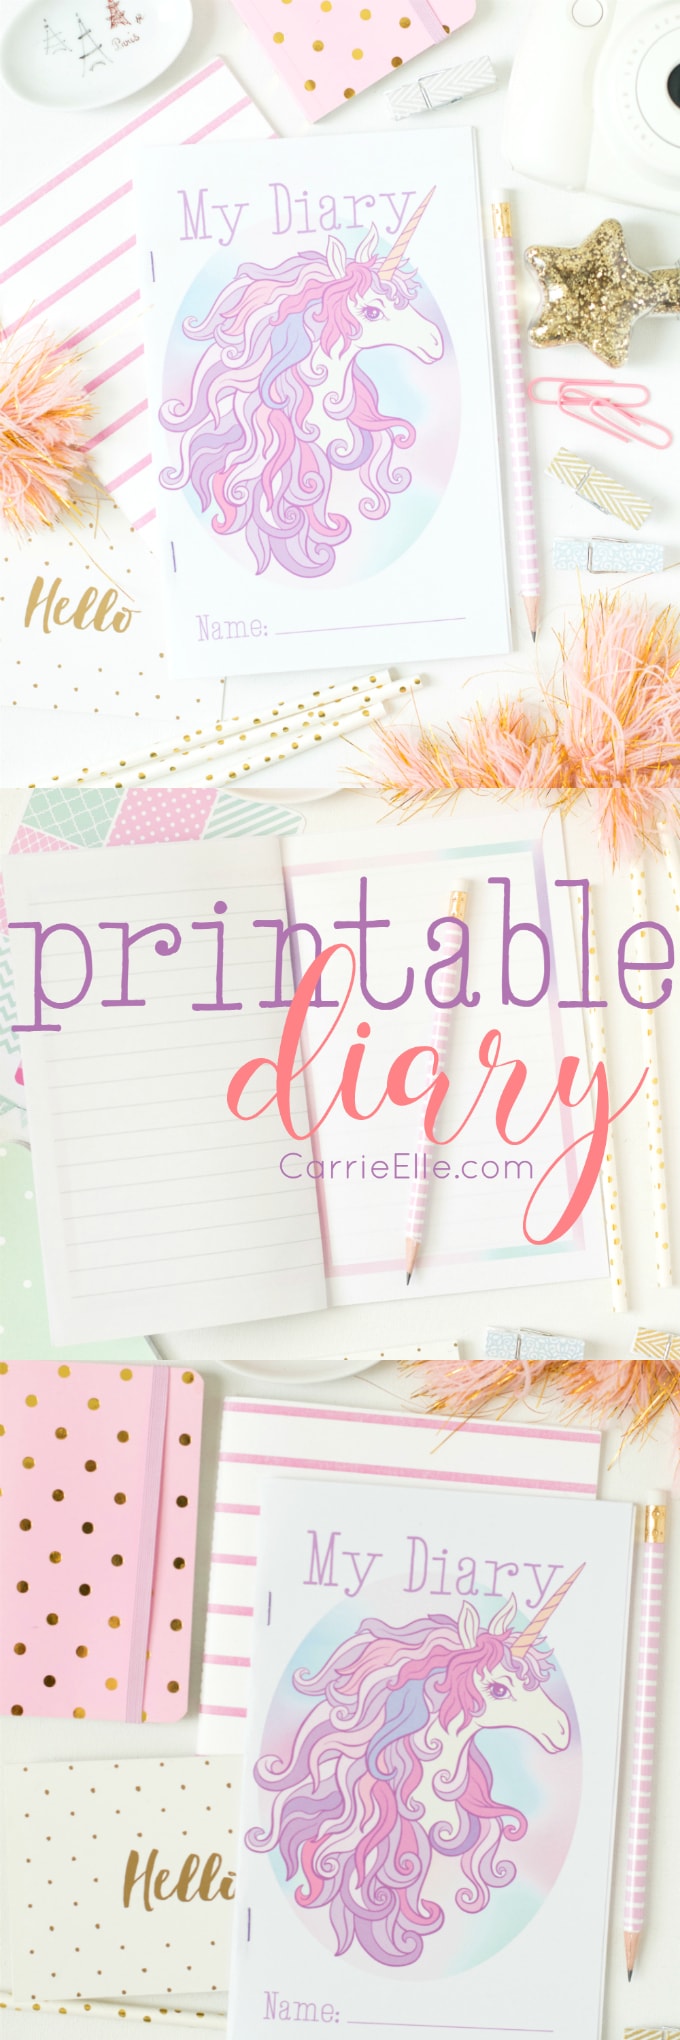 Printable Diary